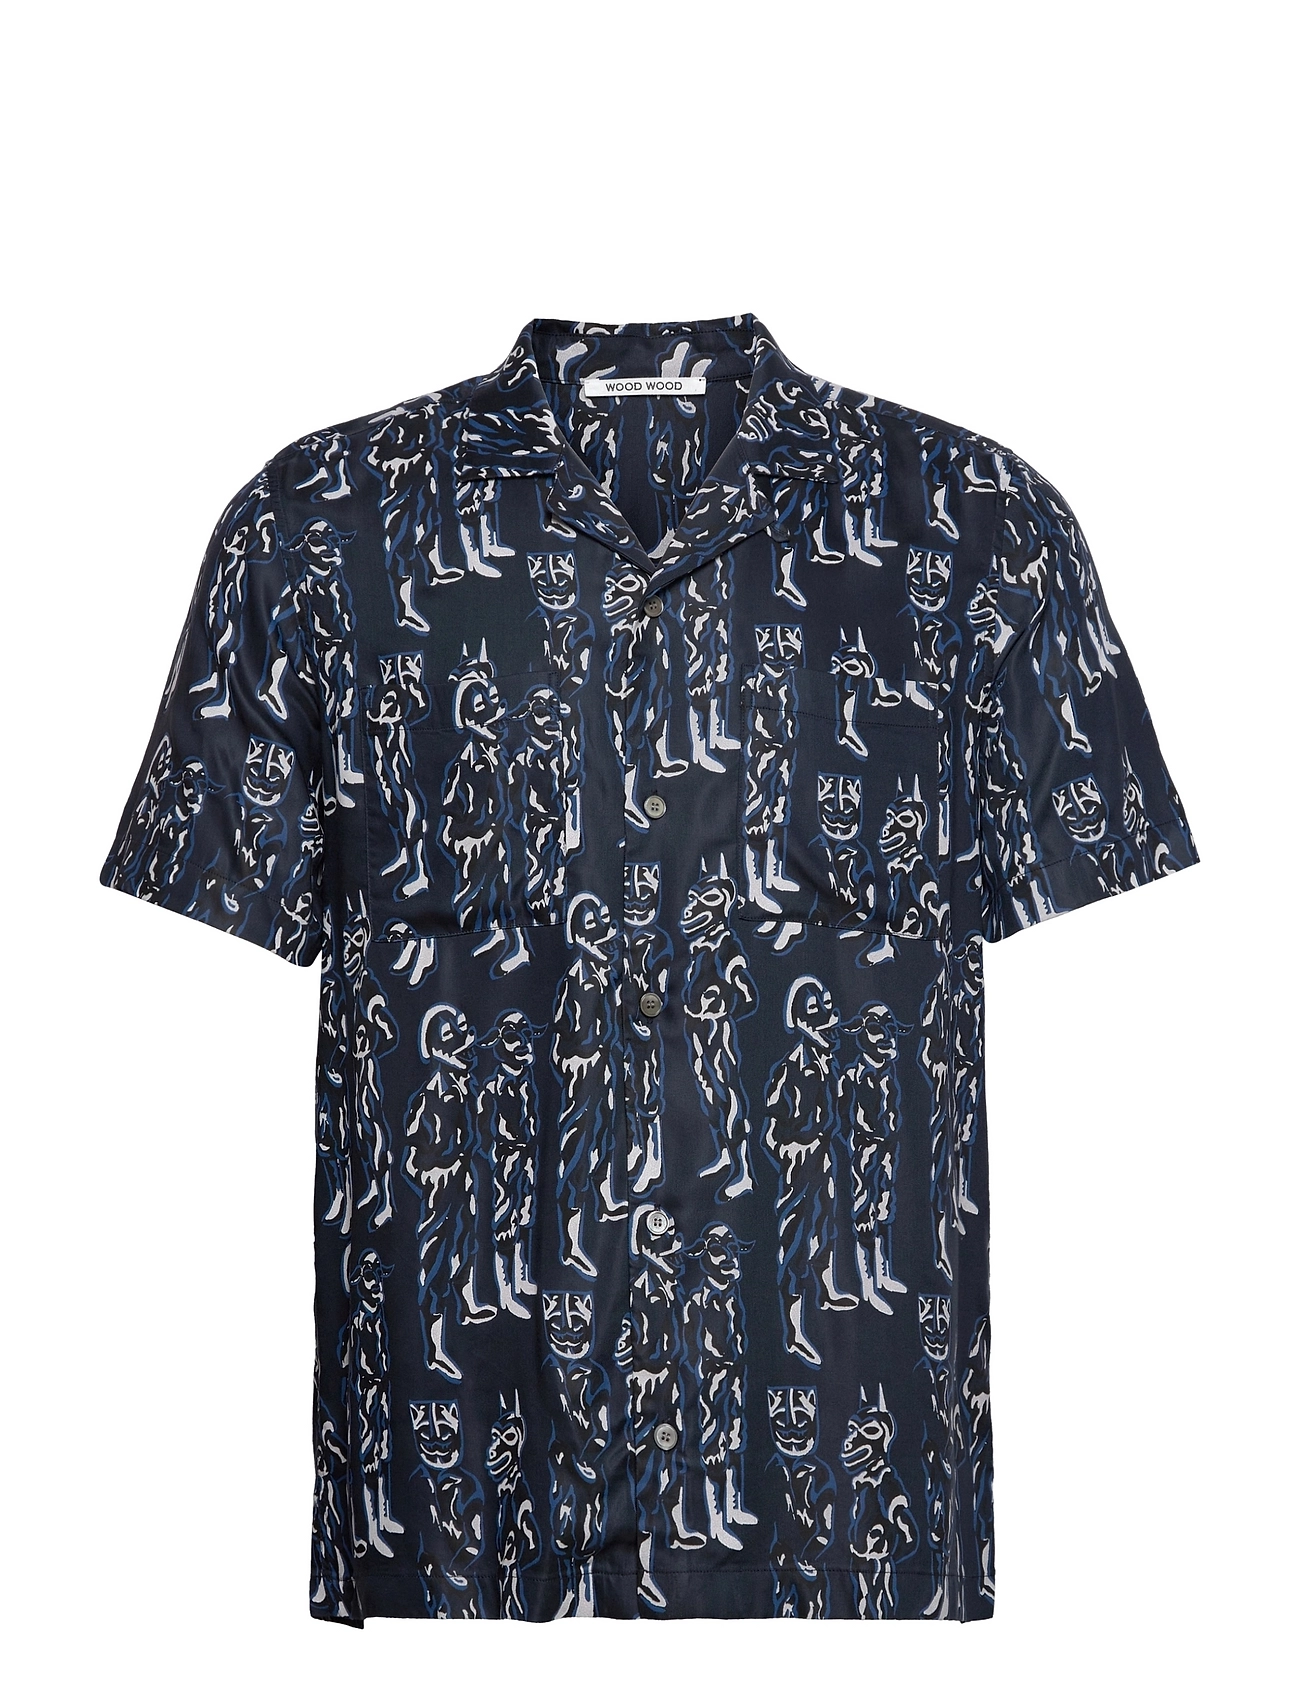 Brandon Jc Drapy Twill Shirt Designers Shirts Short-sleeved Multi/patterned Wood Wood